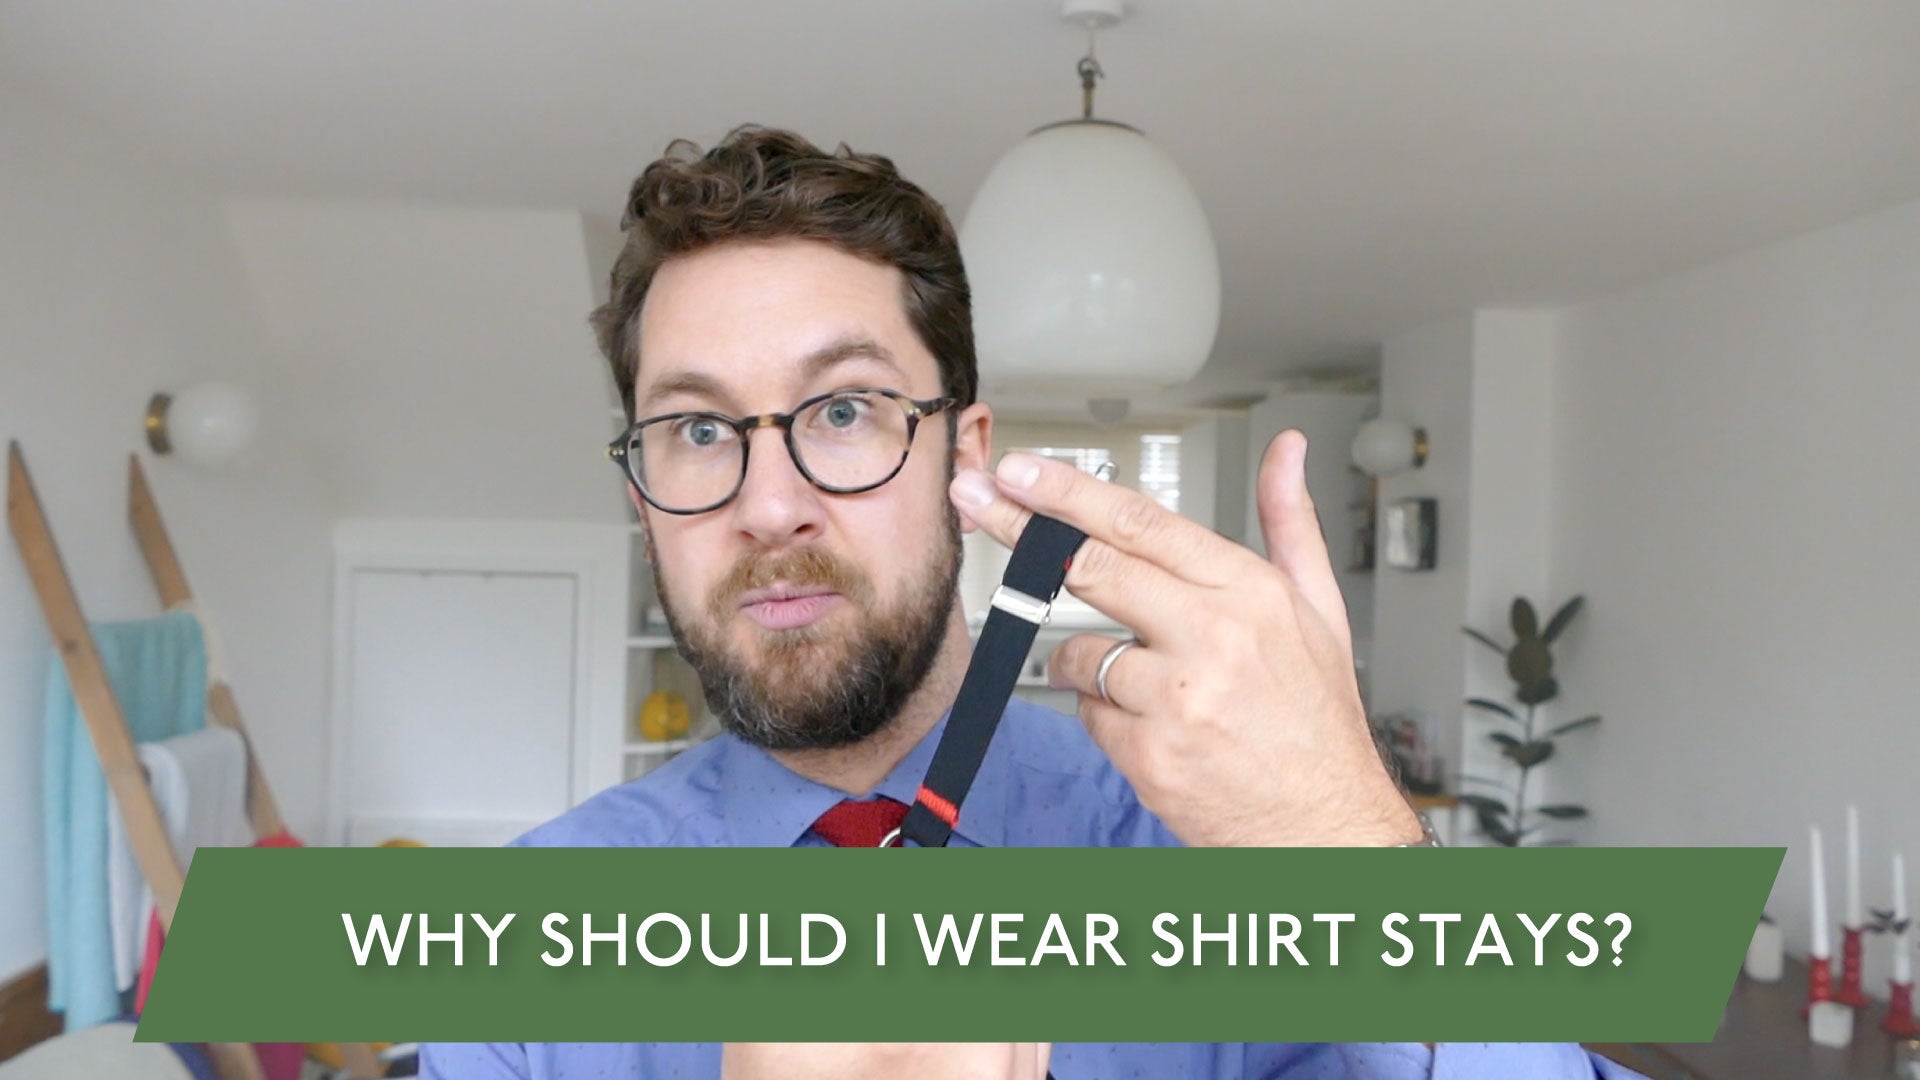 Ask Johan - Why Should I Wear Shirt Stays?